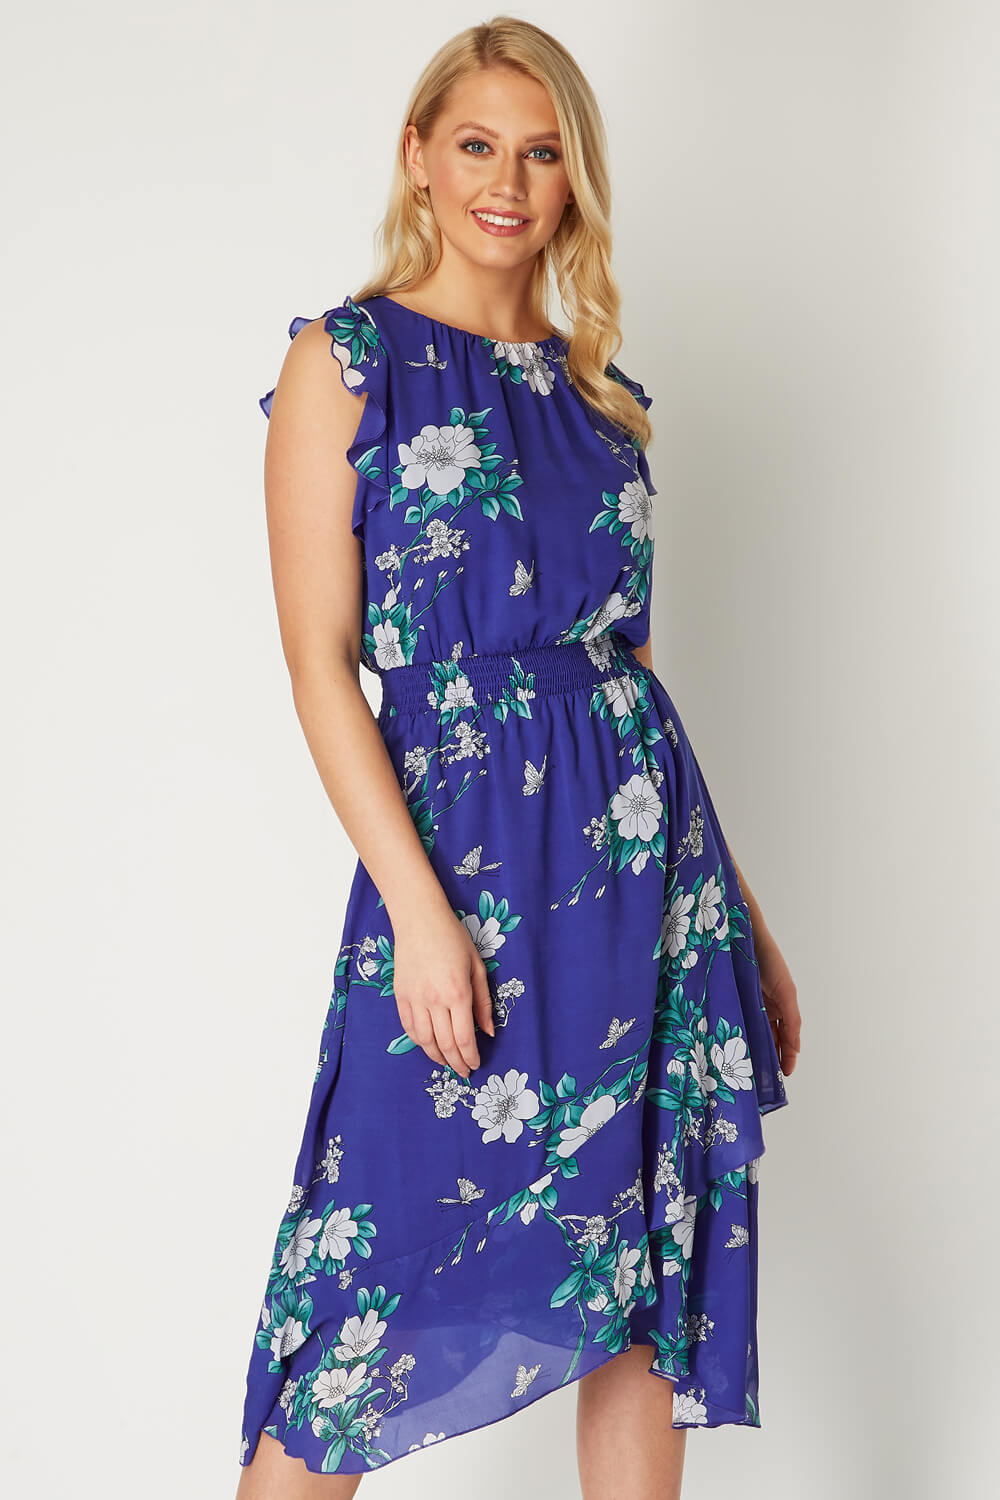 Floral Ruffle Midi Dress in Royal Blue - Roman Originals UK